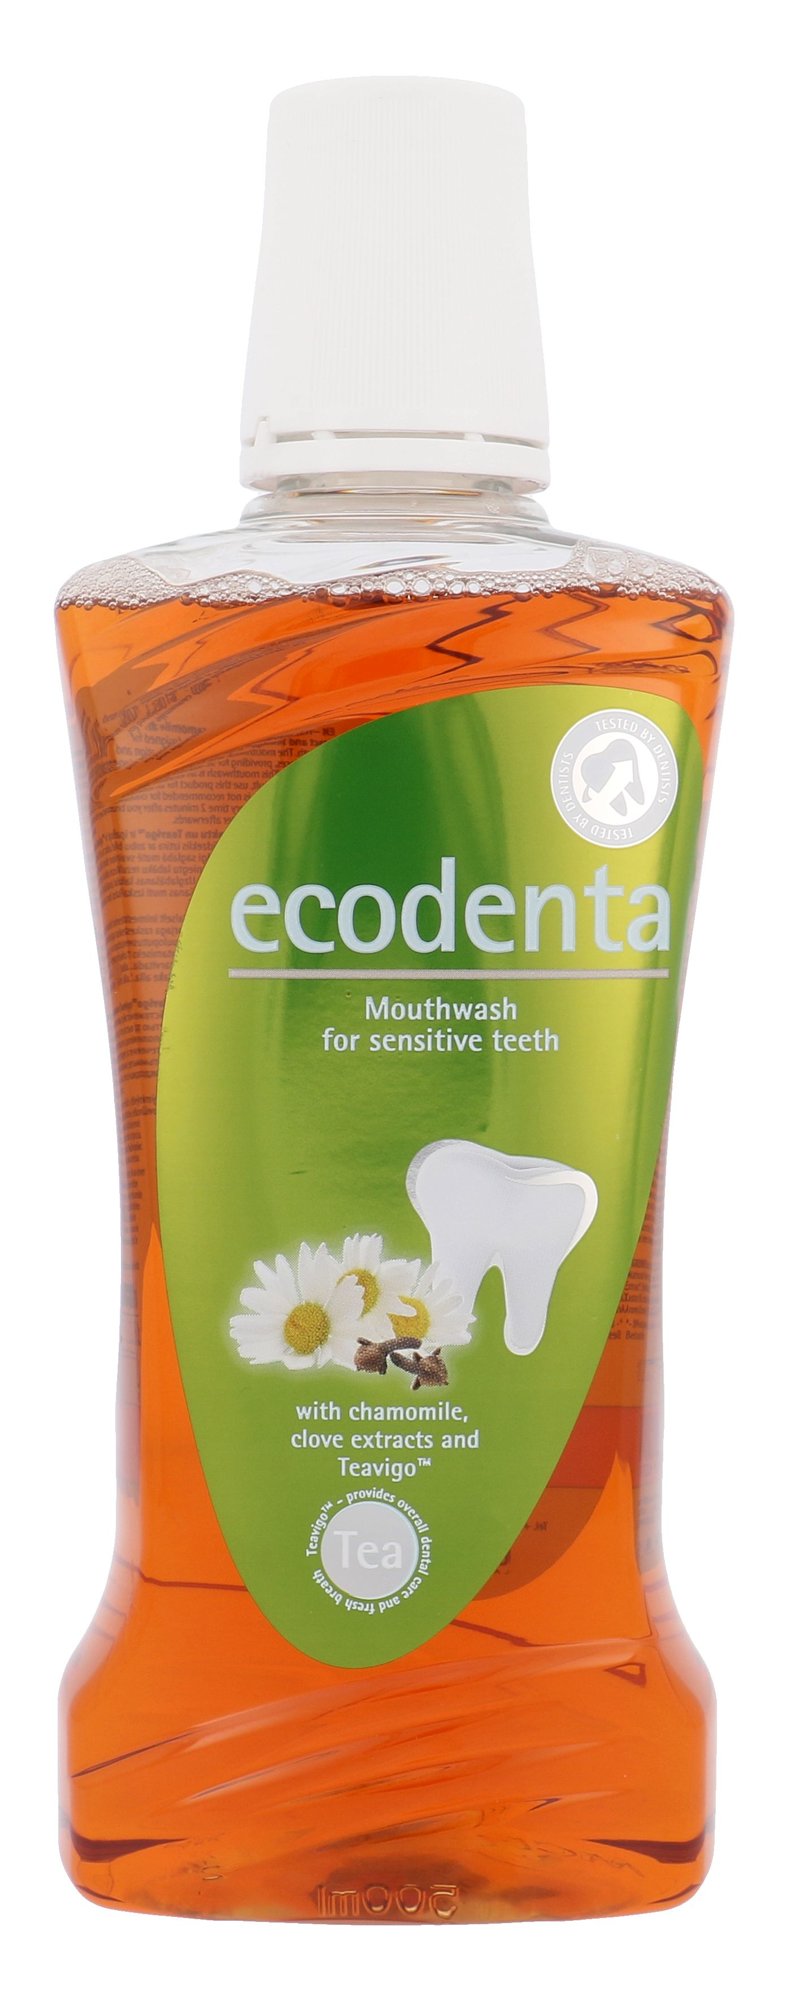 Ecodenta Mouthwash For Sensitive Teeth